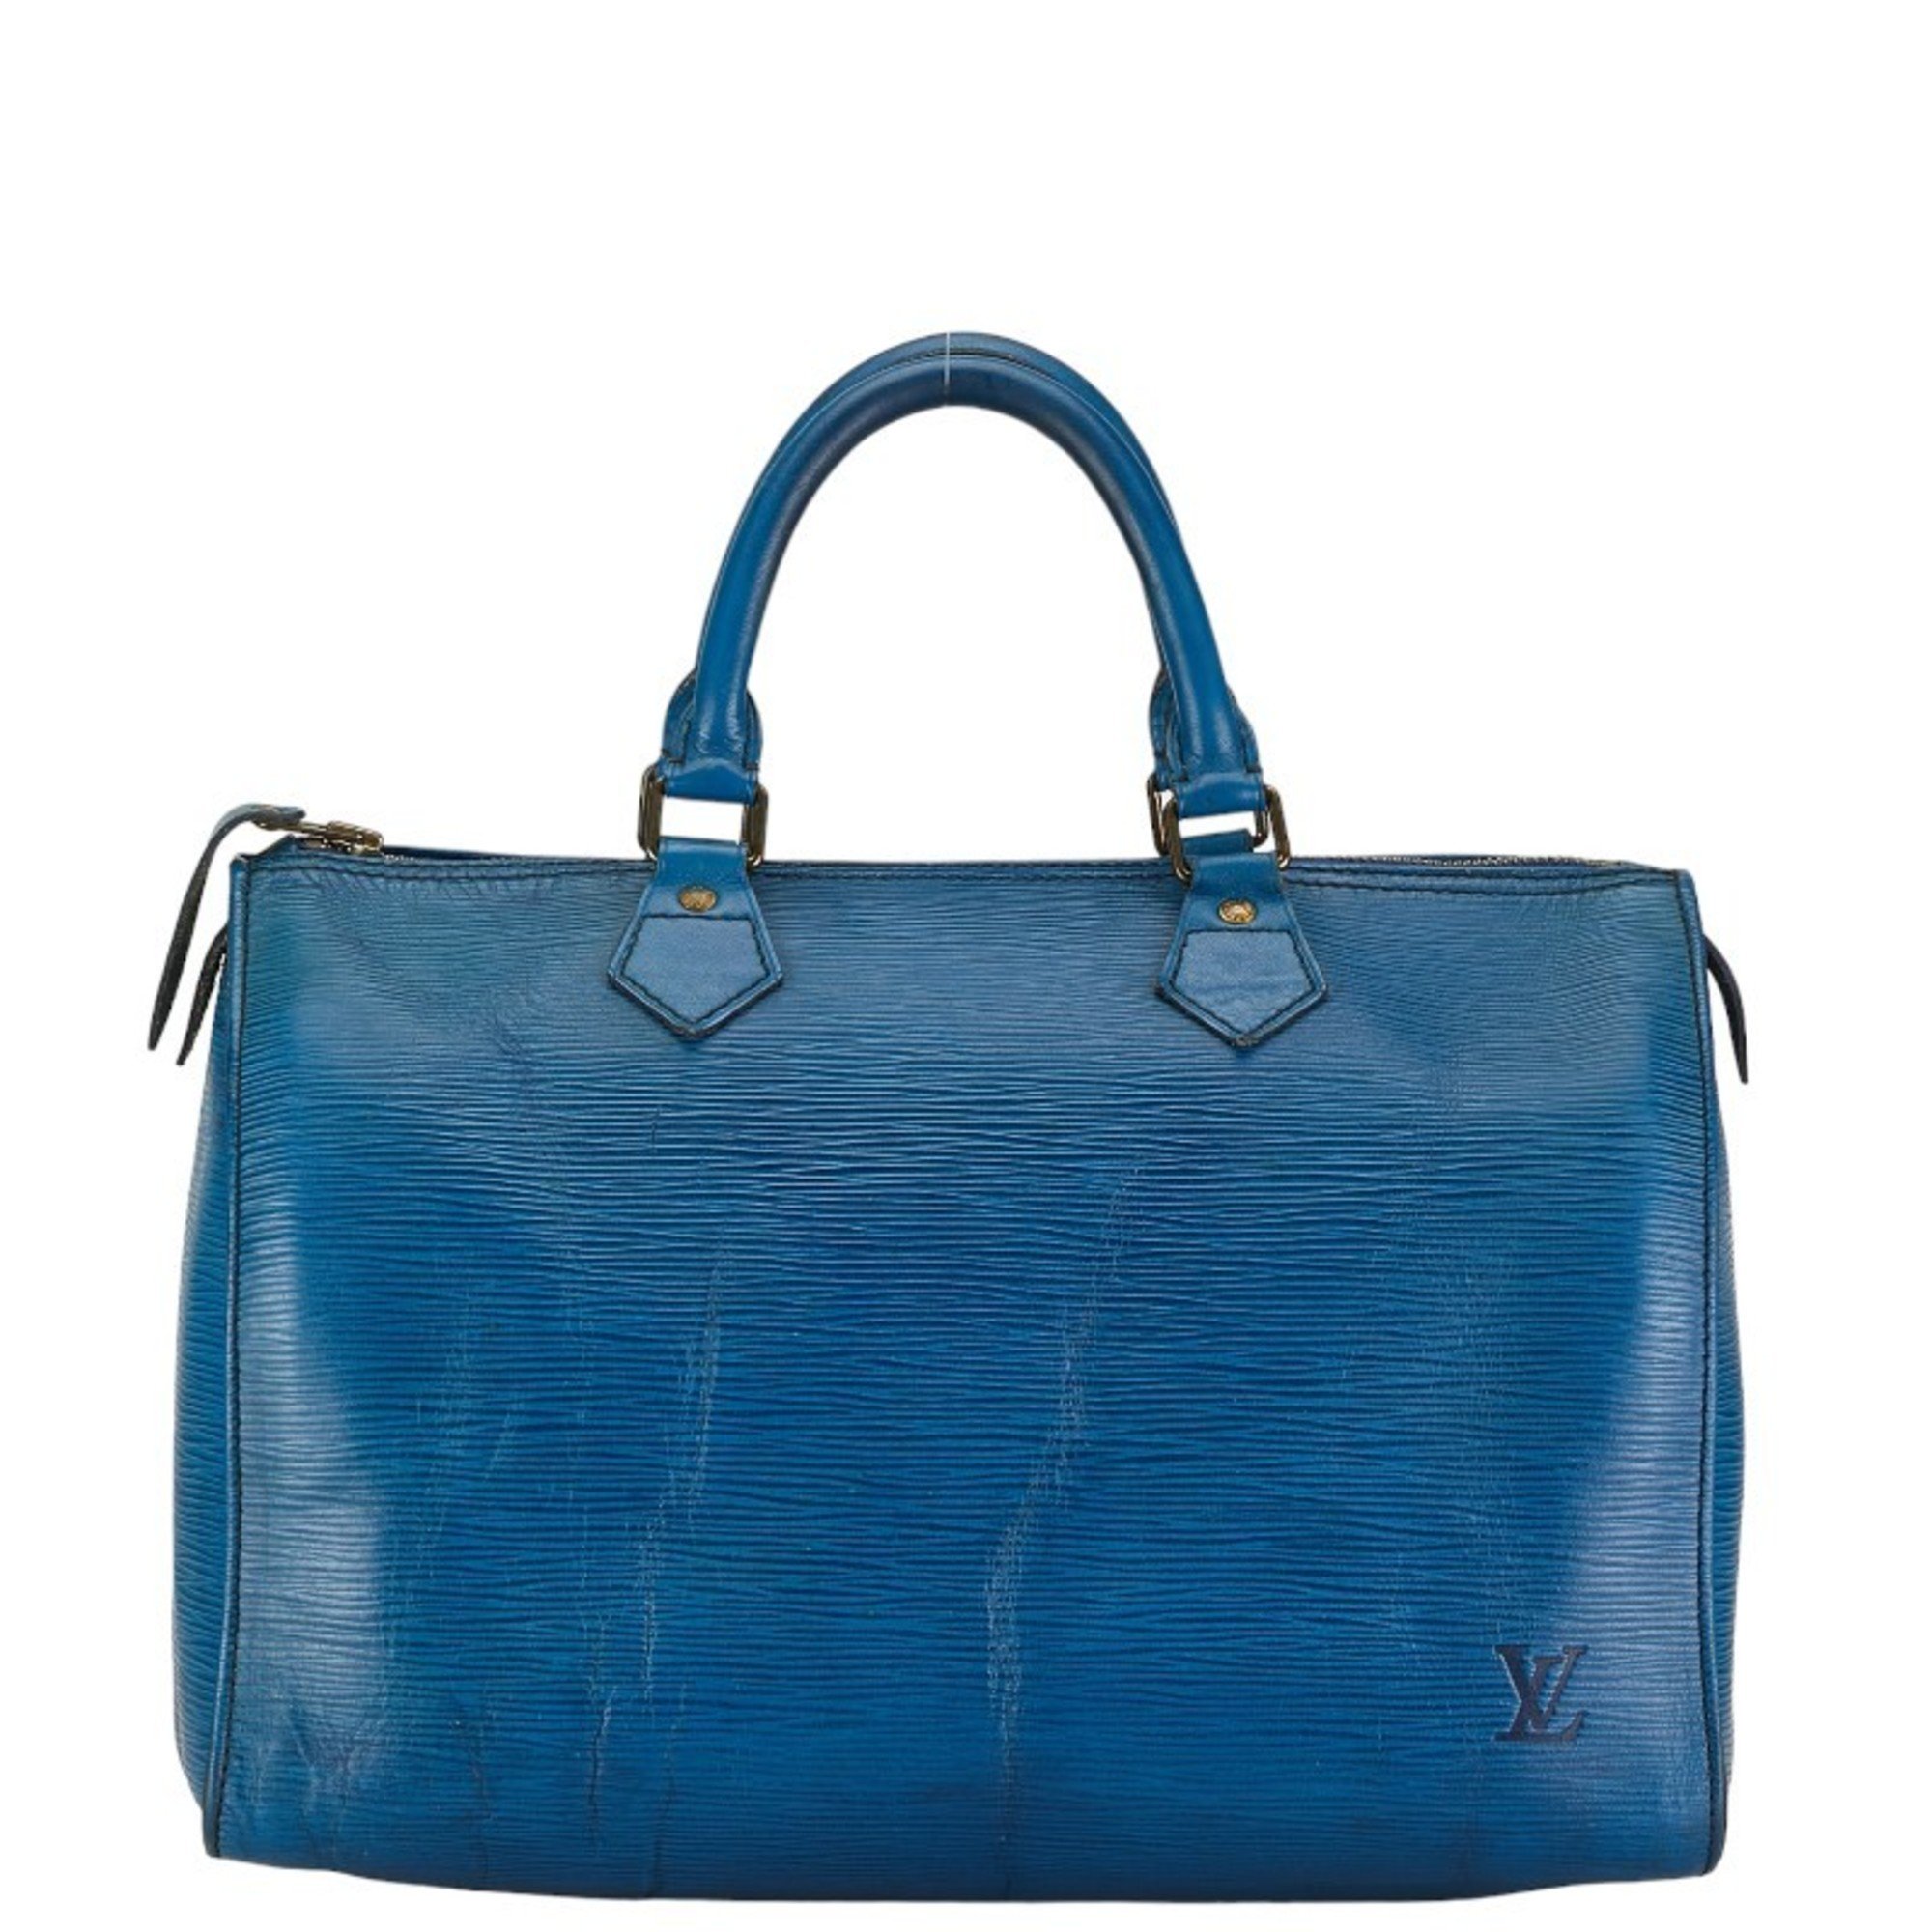 Louis Vuitton Epi Speedy 30 Handbag Boston Bag M43005 Toledo Blue Leather Women's LOUIS VUITTON